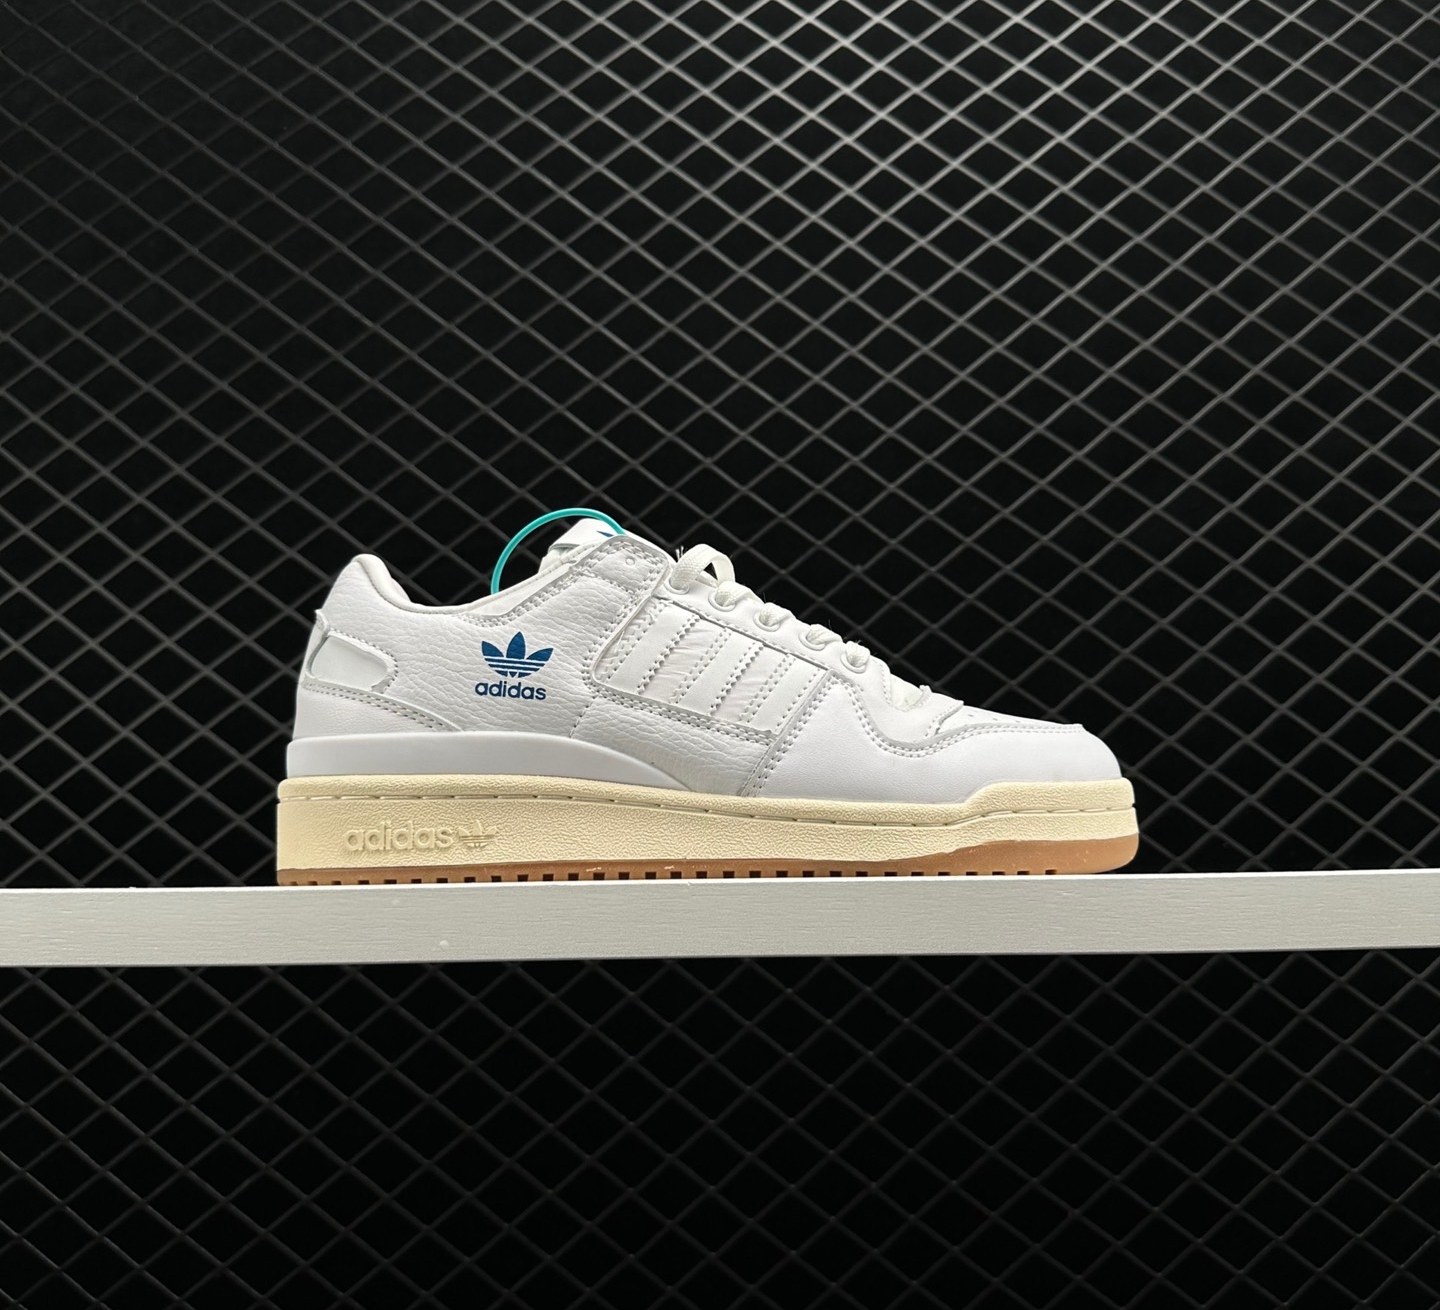 Adidas Forum 84 'White Blue Bird' H04903: Classic Style meets Fresh Hues